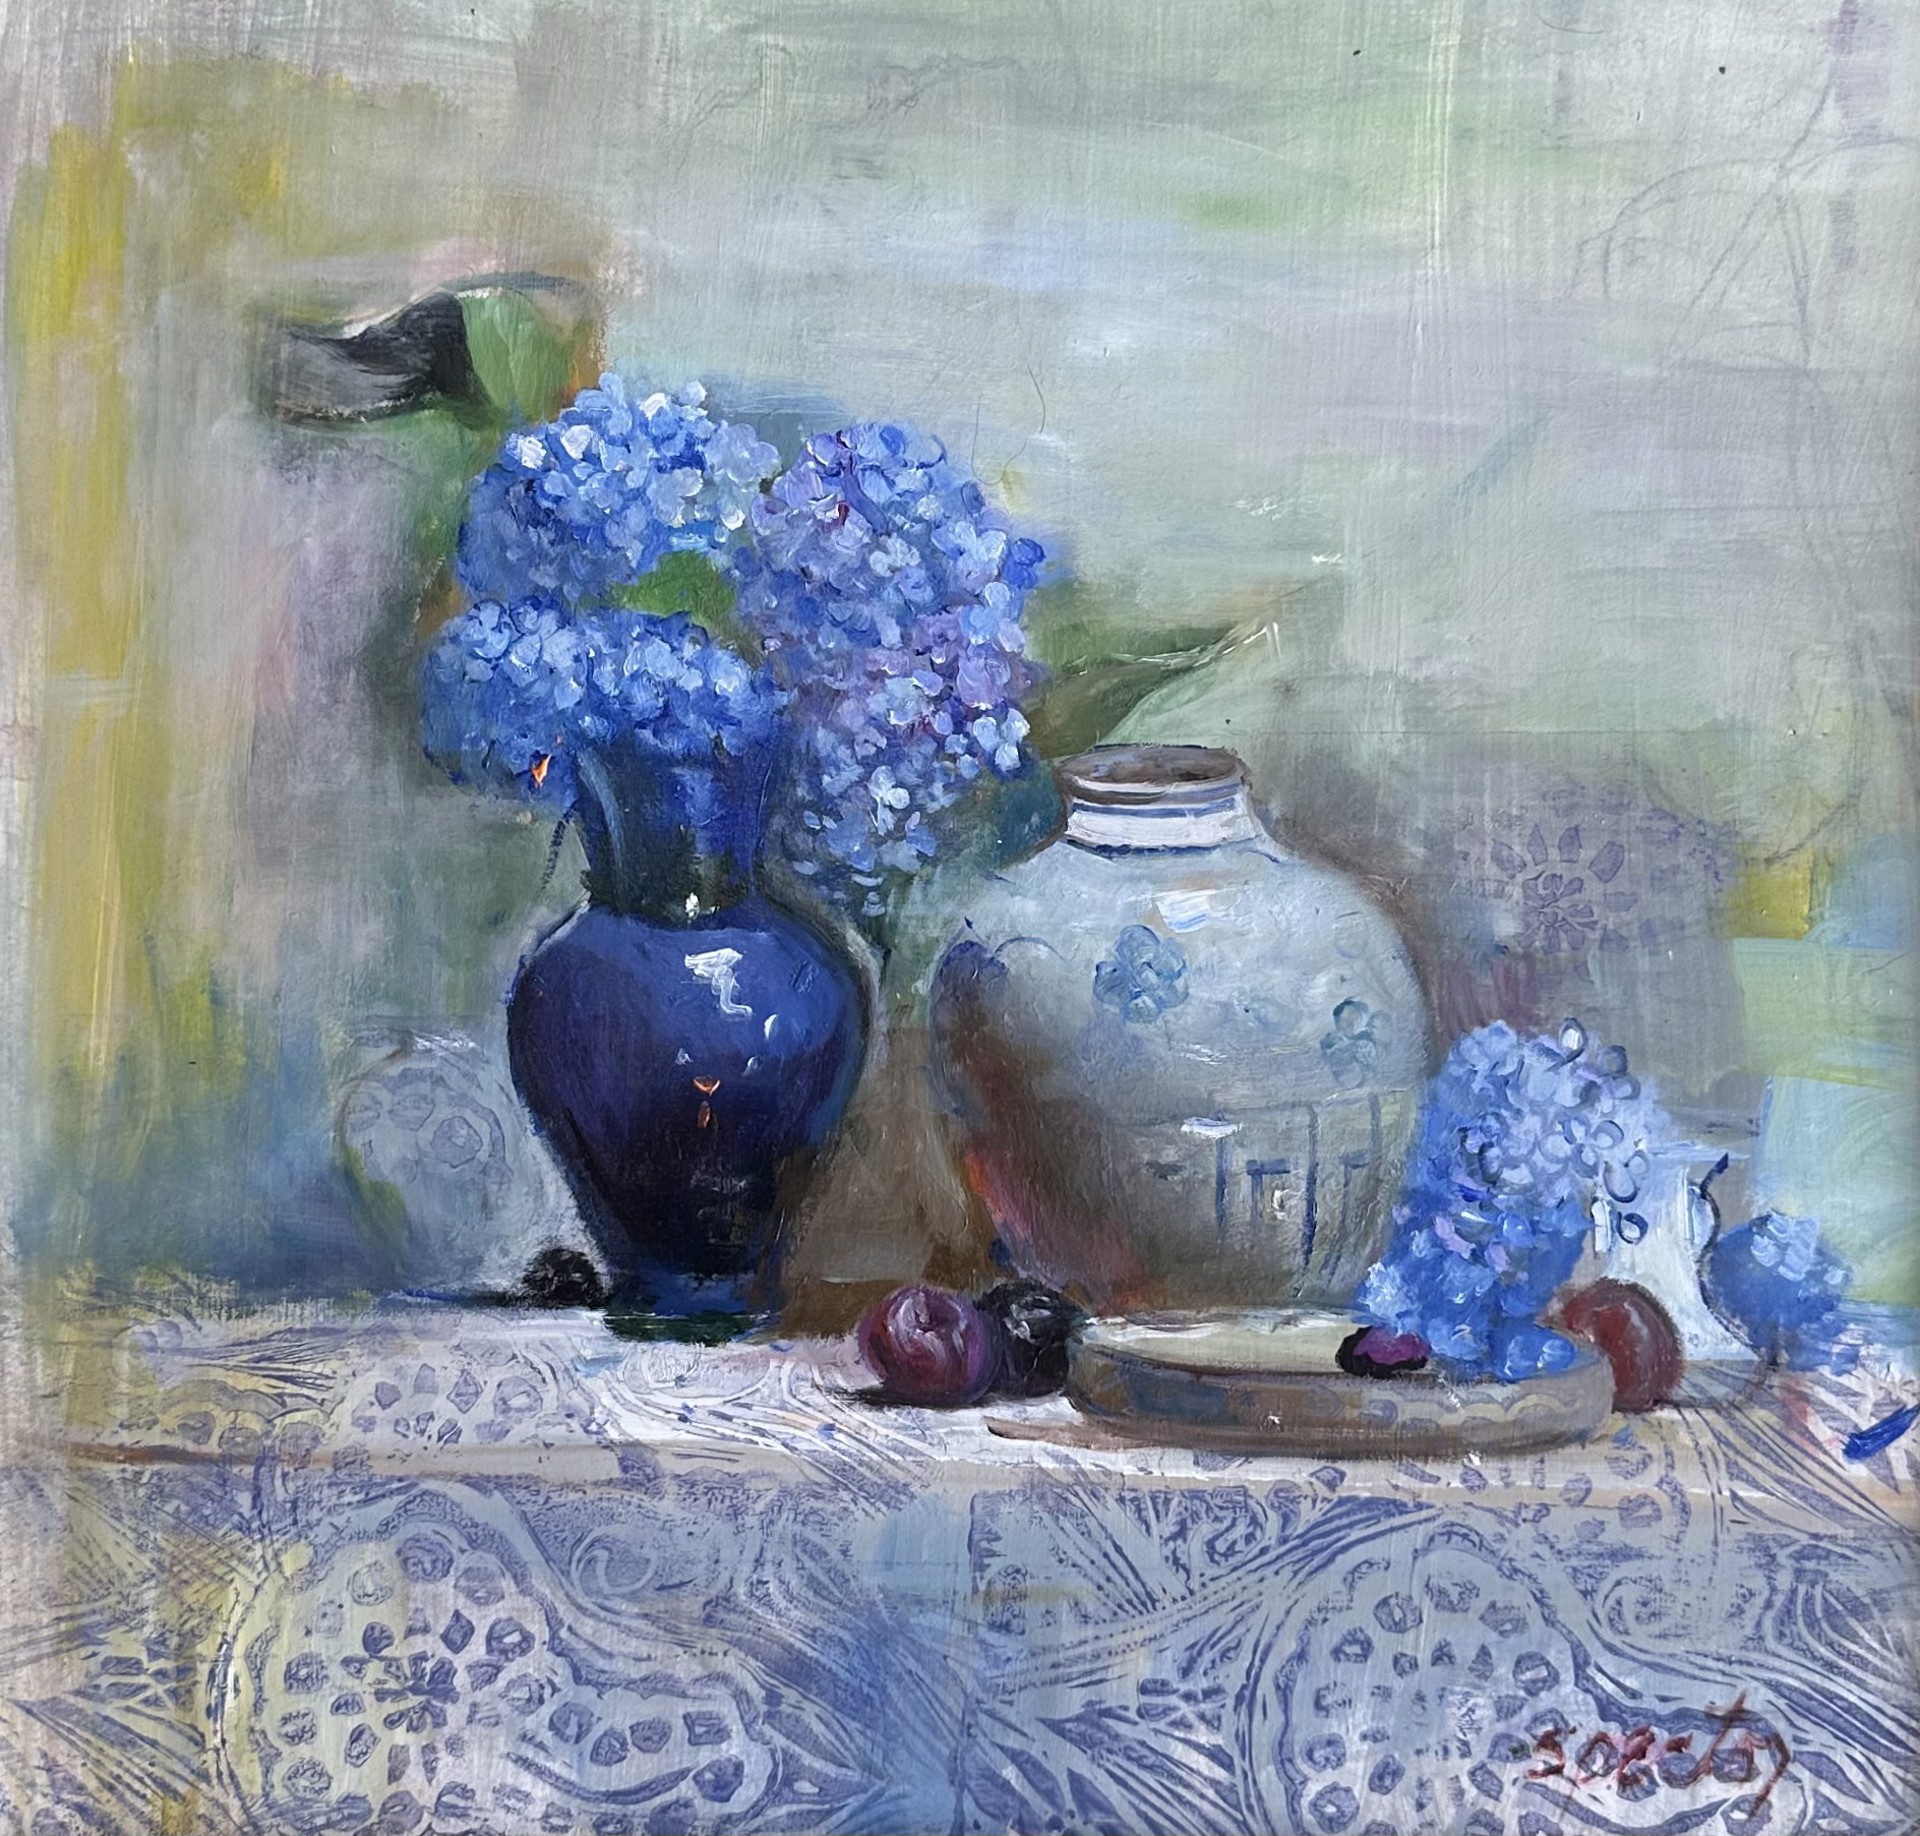 Blue Hydrangeas by Dori Spector